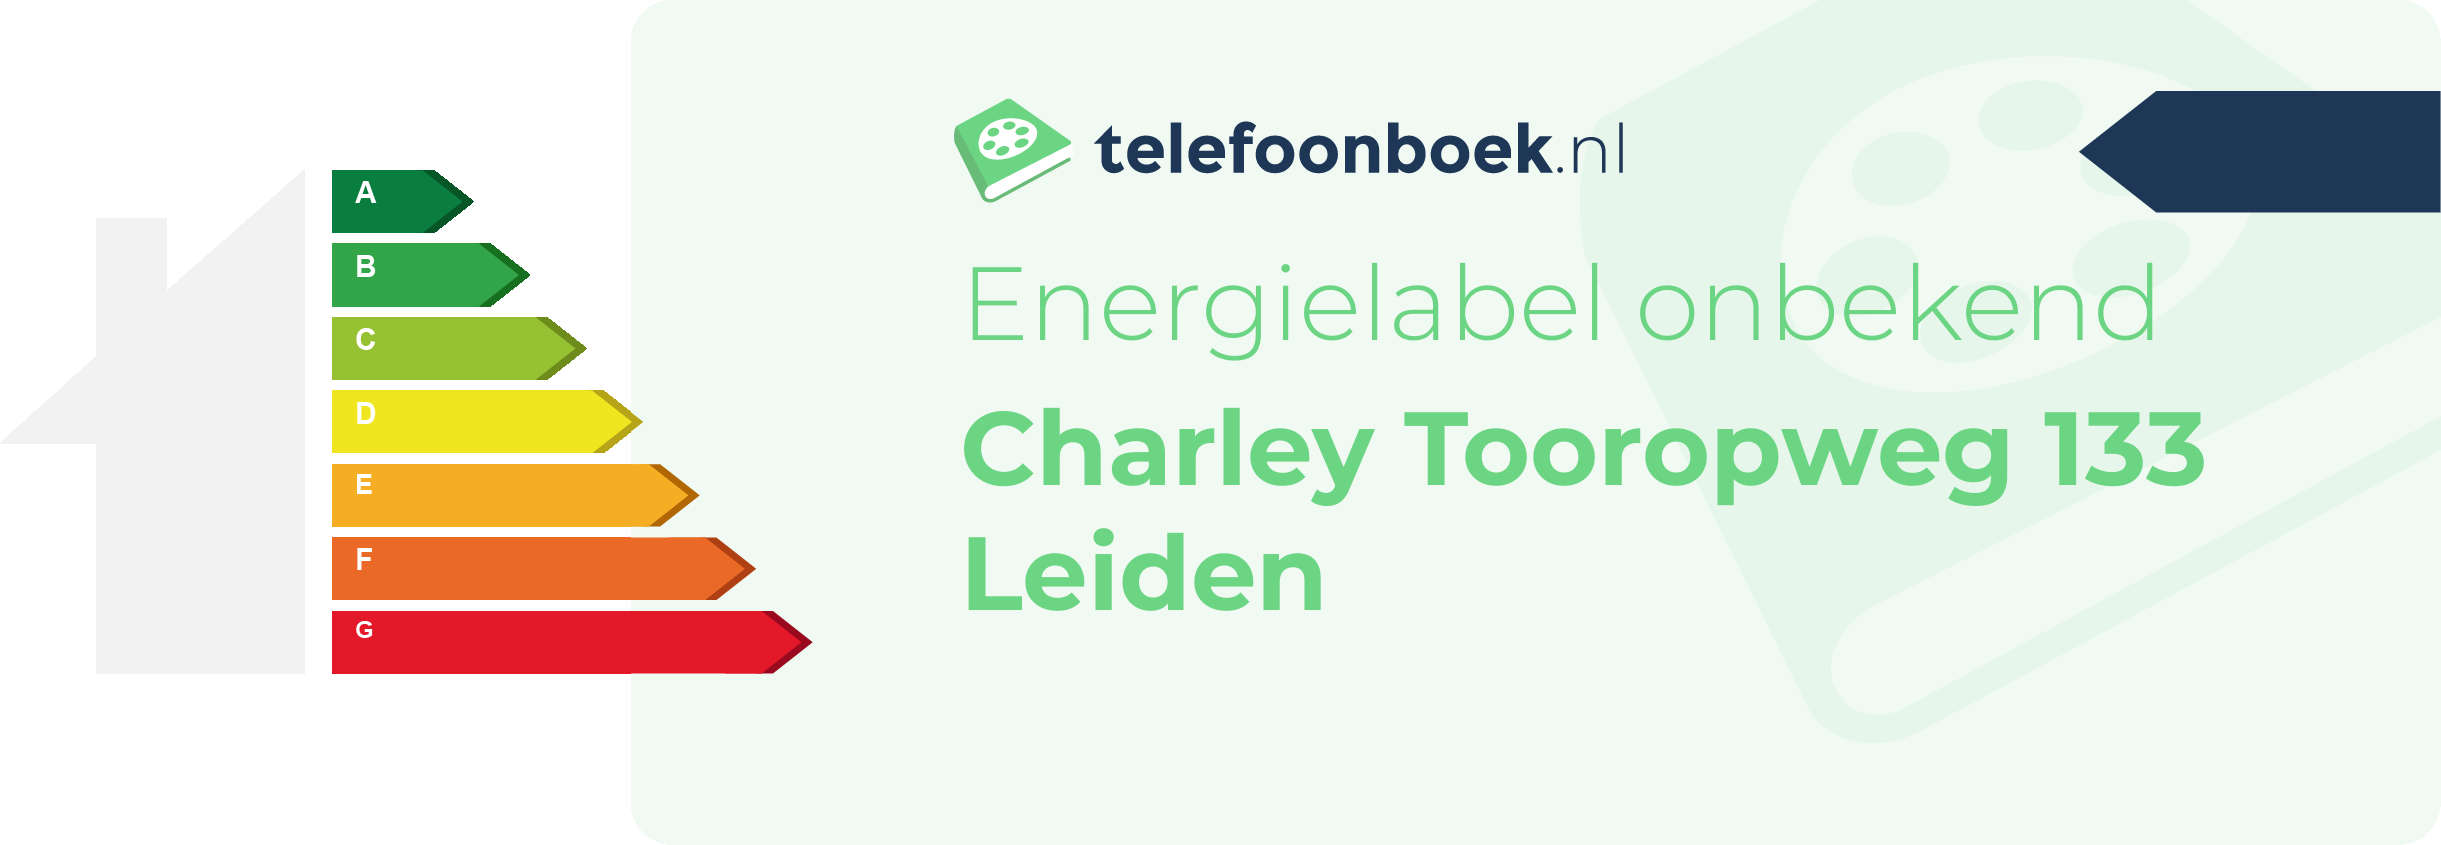 Energielabel Charley Tooropweg 133 Leiden